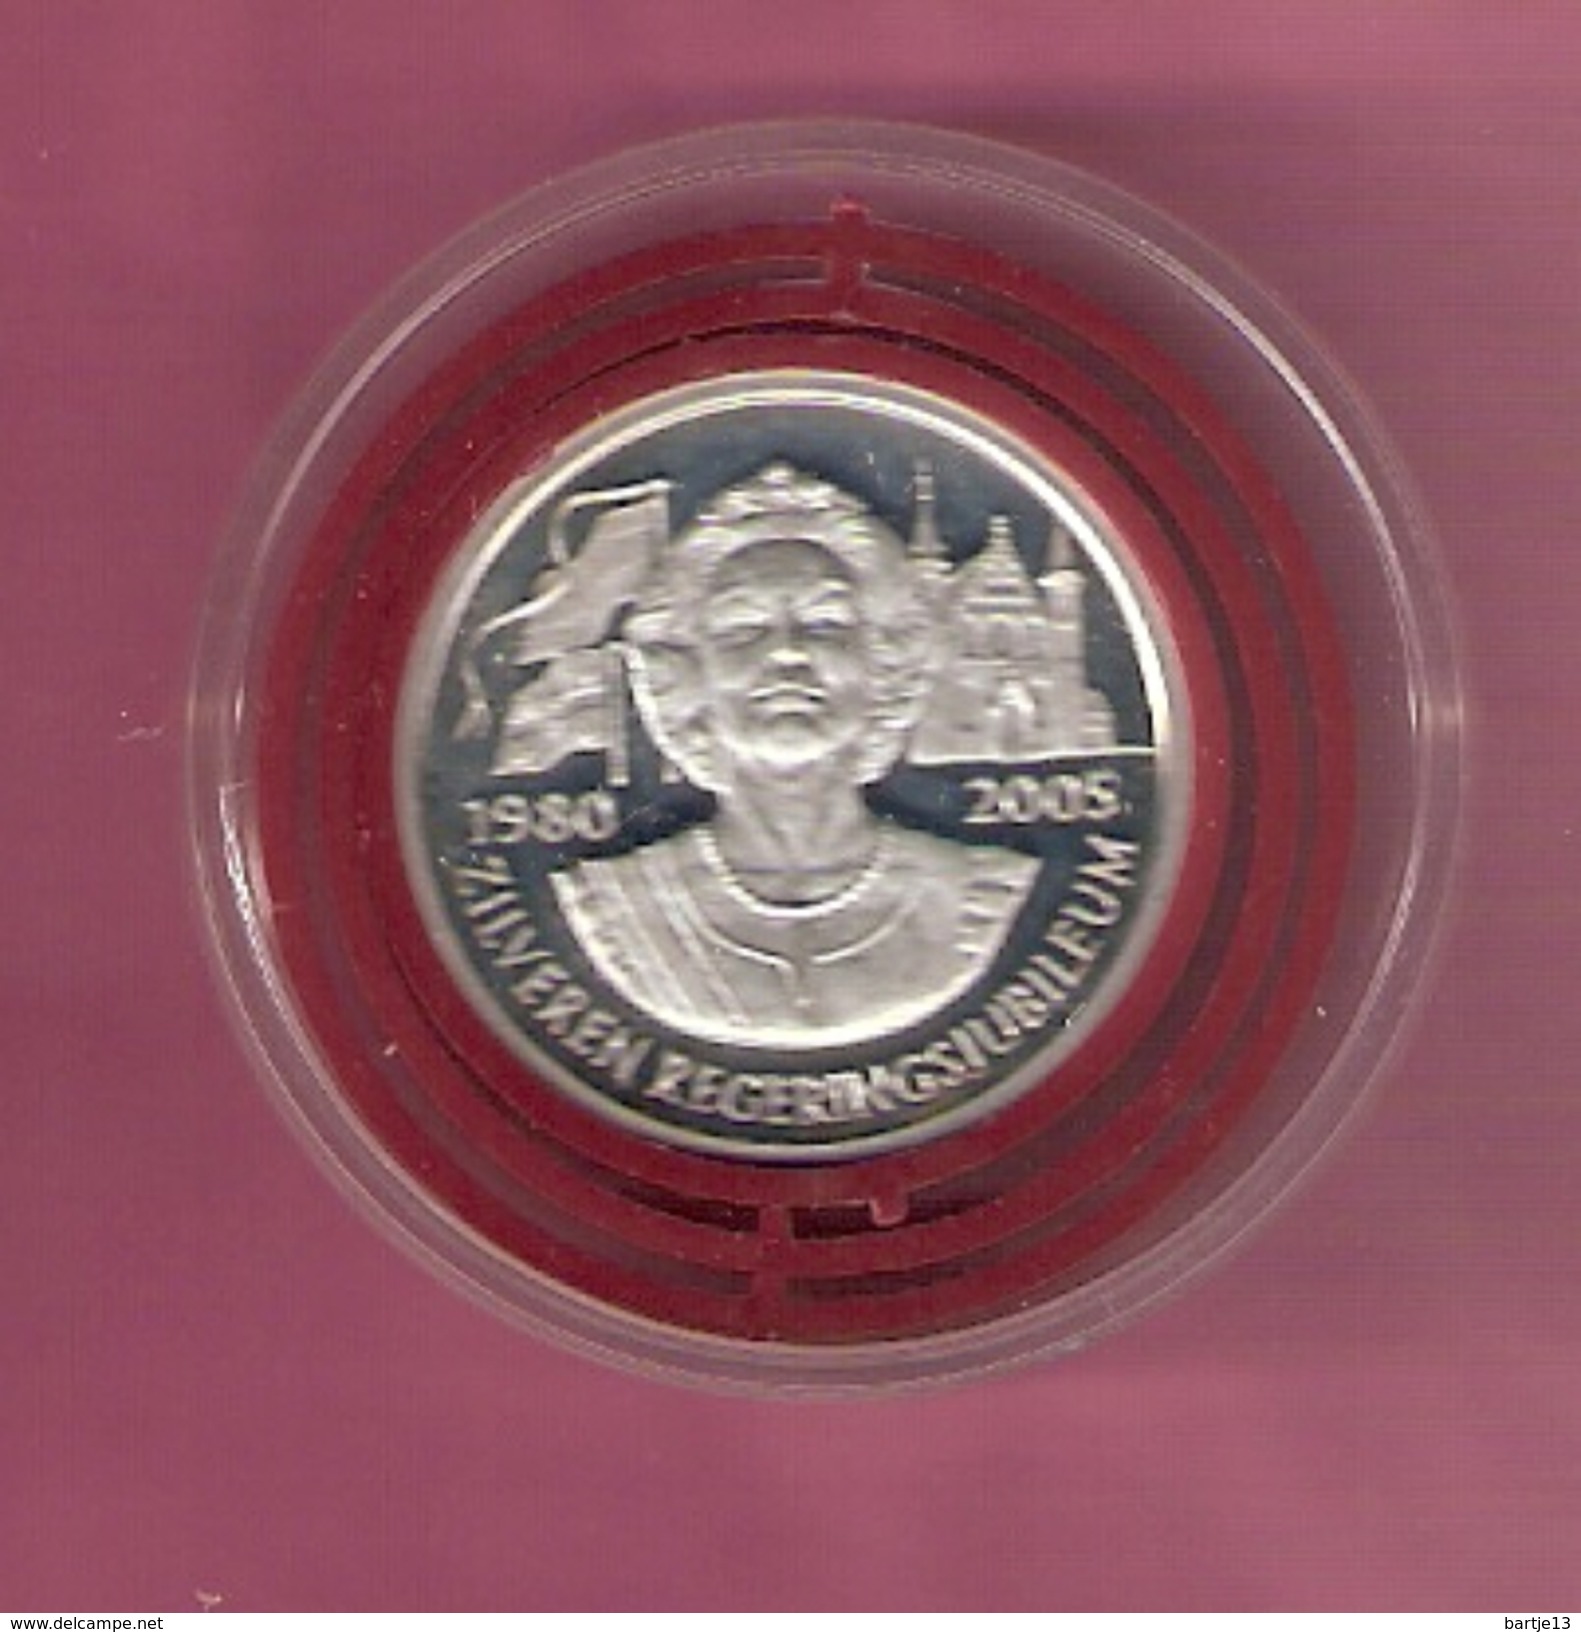 NEDERLAND SILVER MEDAL 2005 BEATRIX 25 YEAR QUEEN - Souvenir-Medaille (elongated Coins)